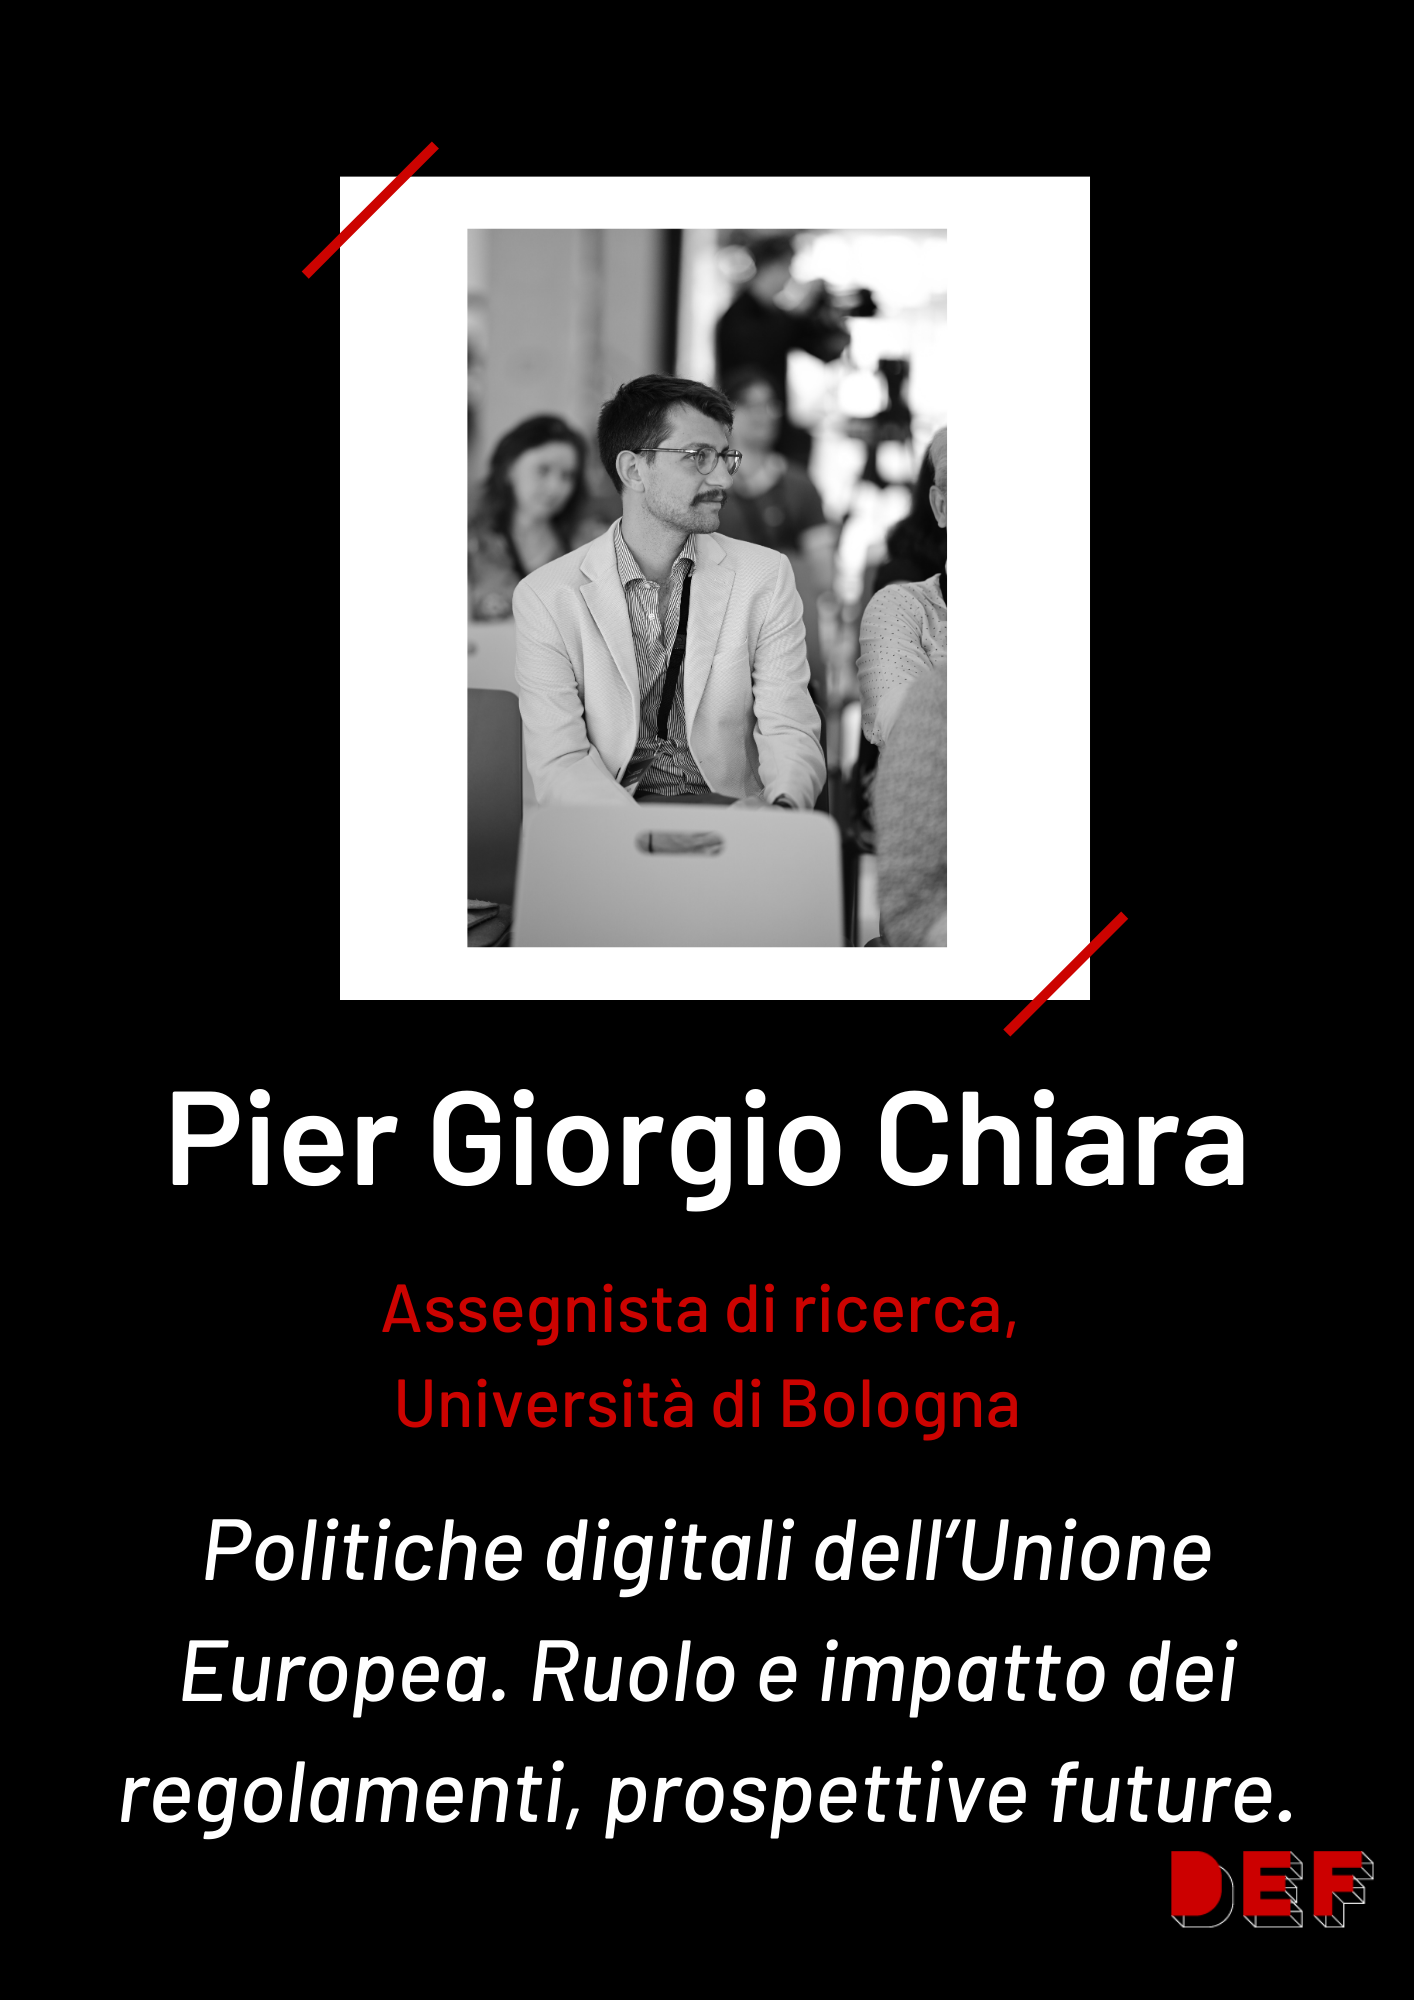 card Pier Giorgio Chiara - DEF23